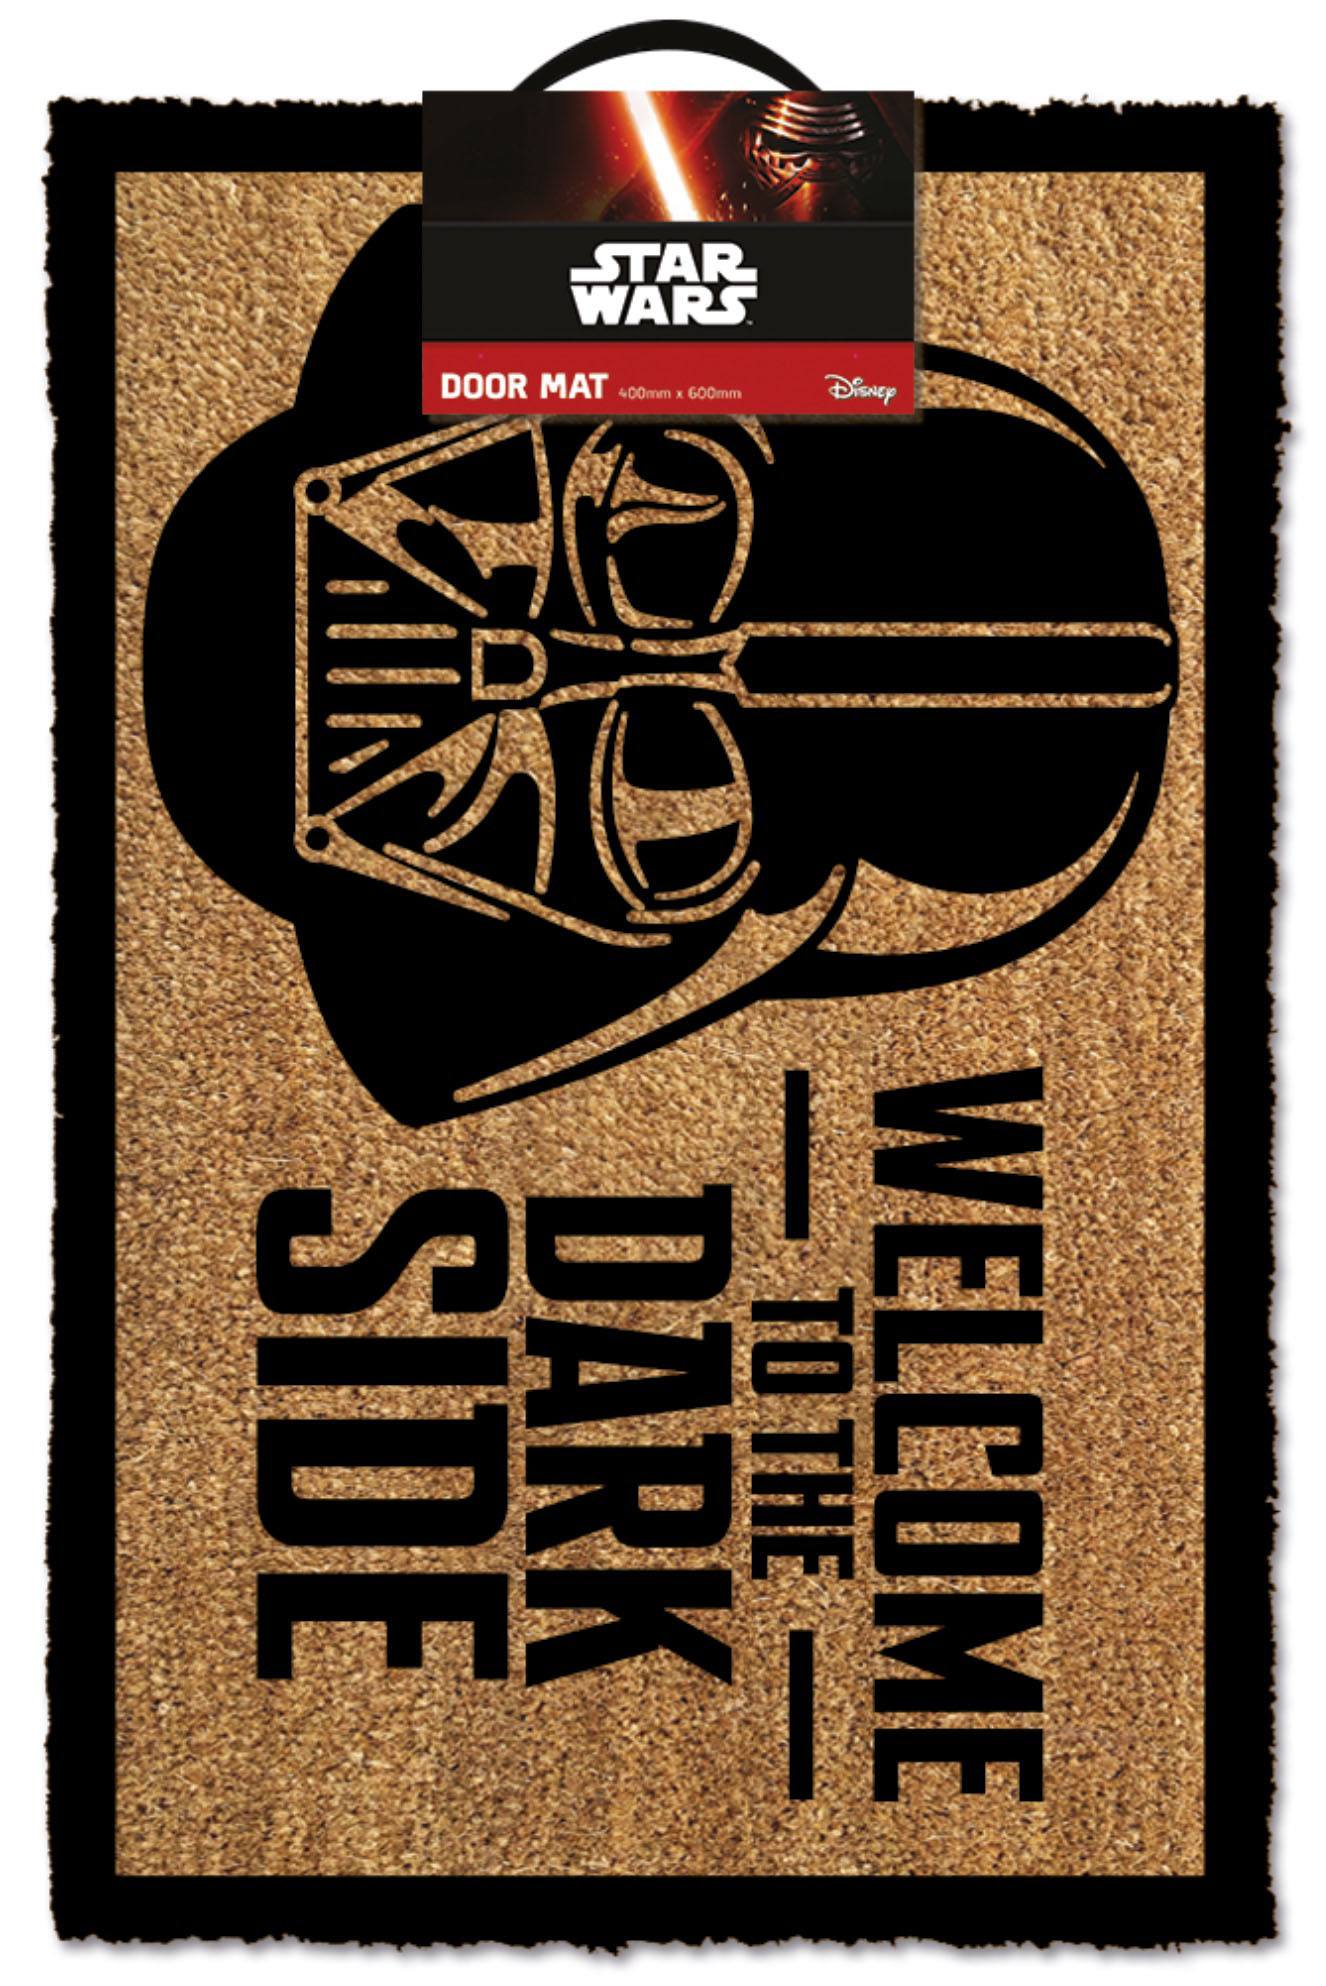 Star Wars 'Welcome To The Dark Side' Doormat Black (40 x 60cm)